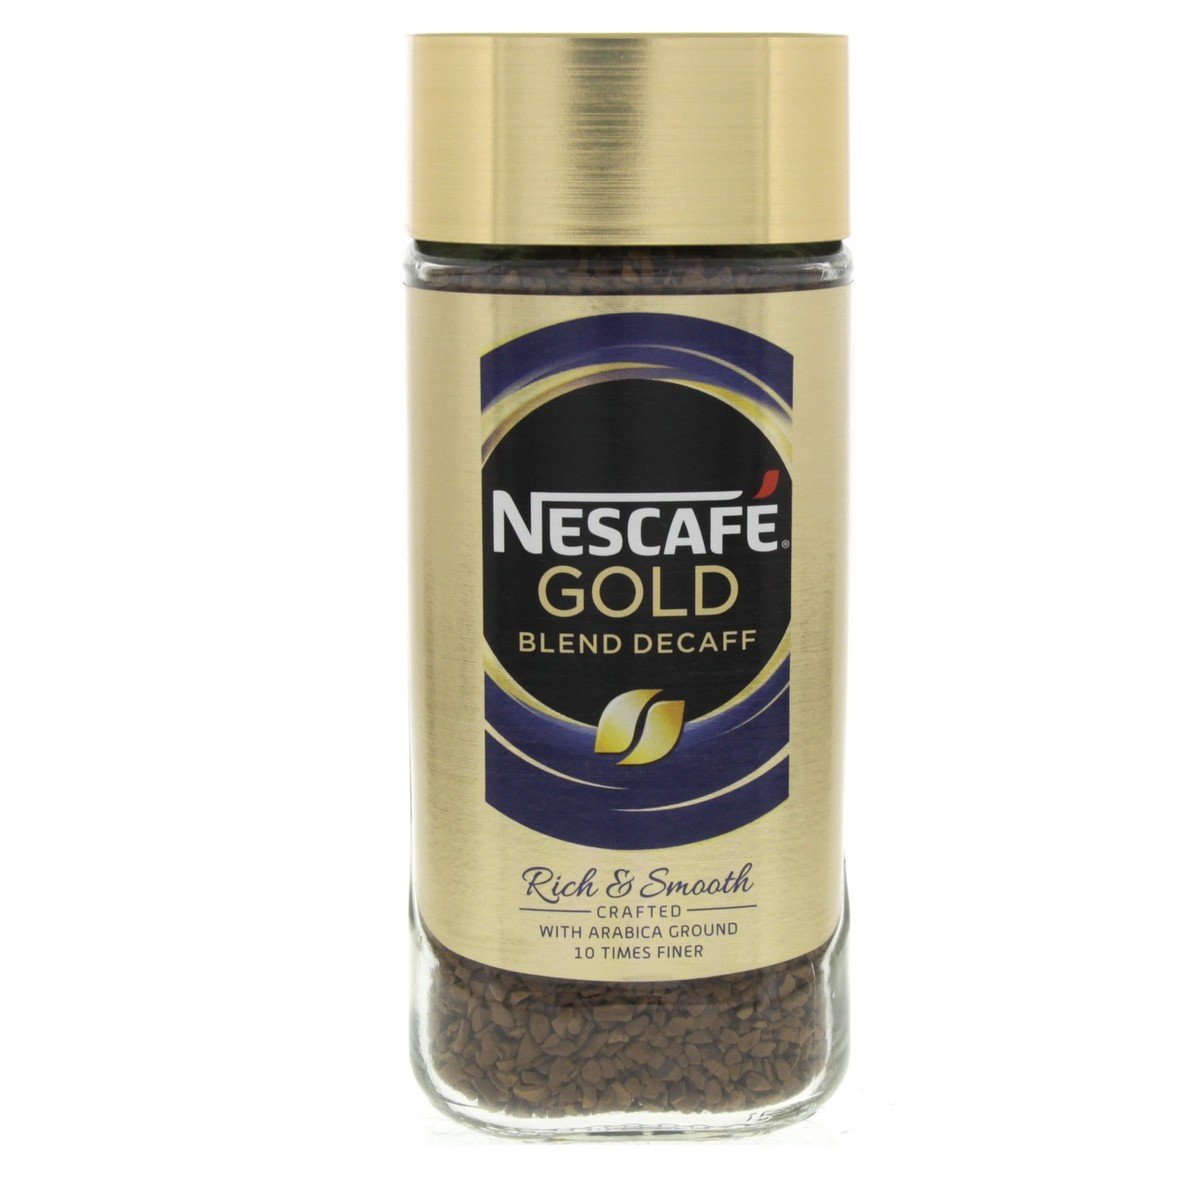 Nescafe Gold Blend Decaff Coffee100g